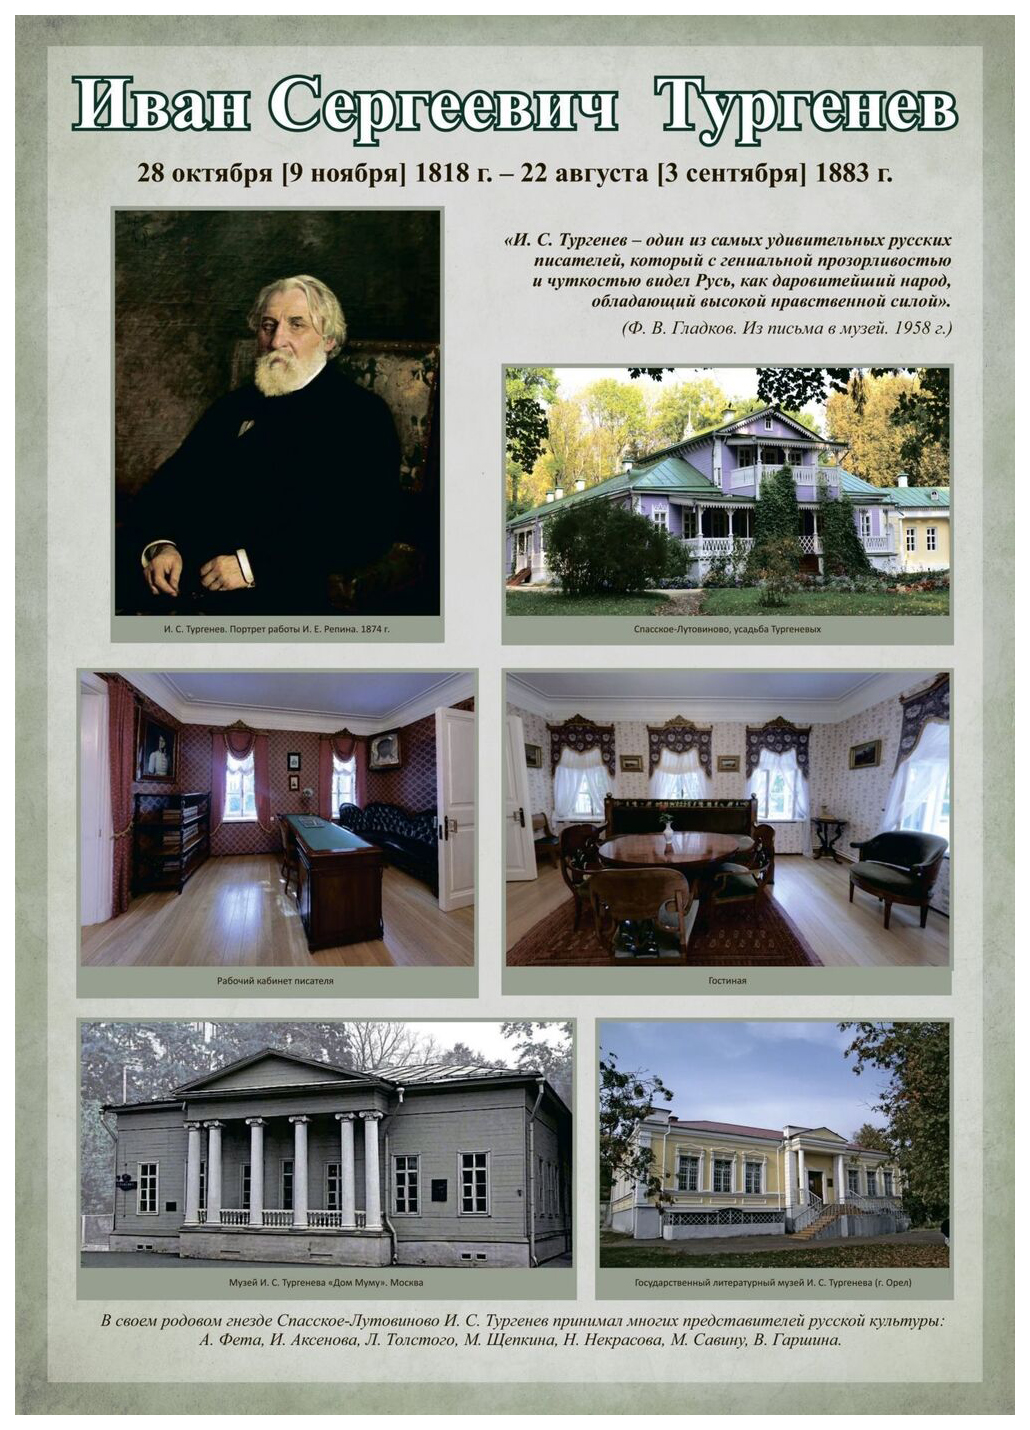 Комплект плакатов "Творчество И.С. Тургенева": 12 плакатов с методическими рекомендациями